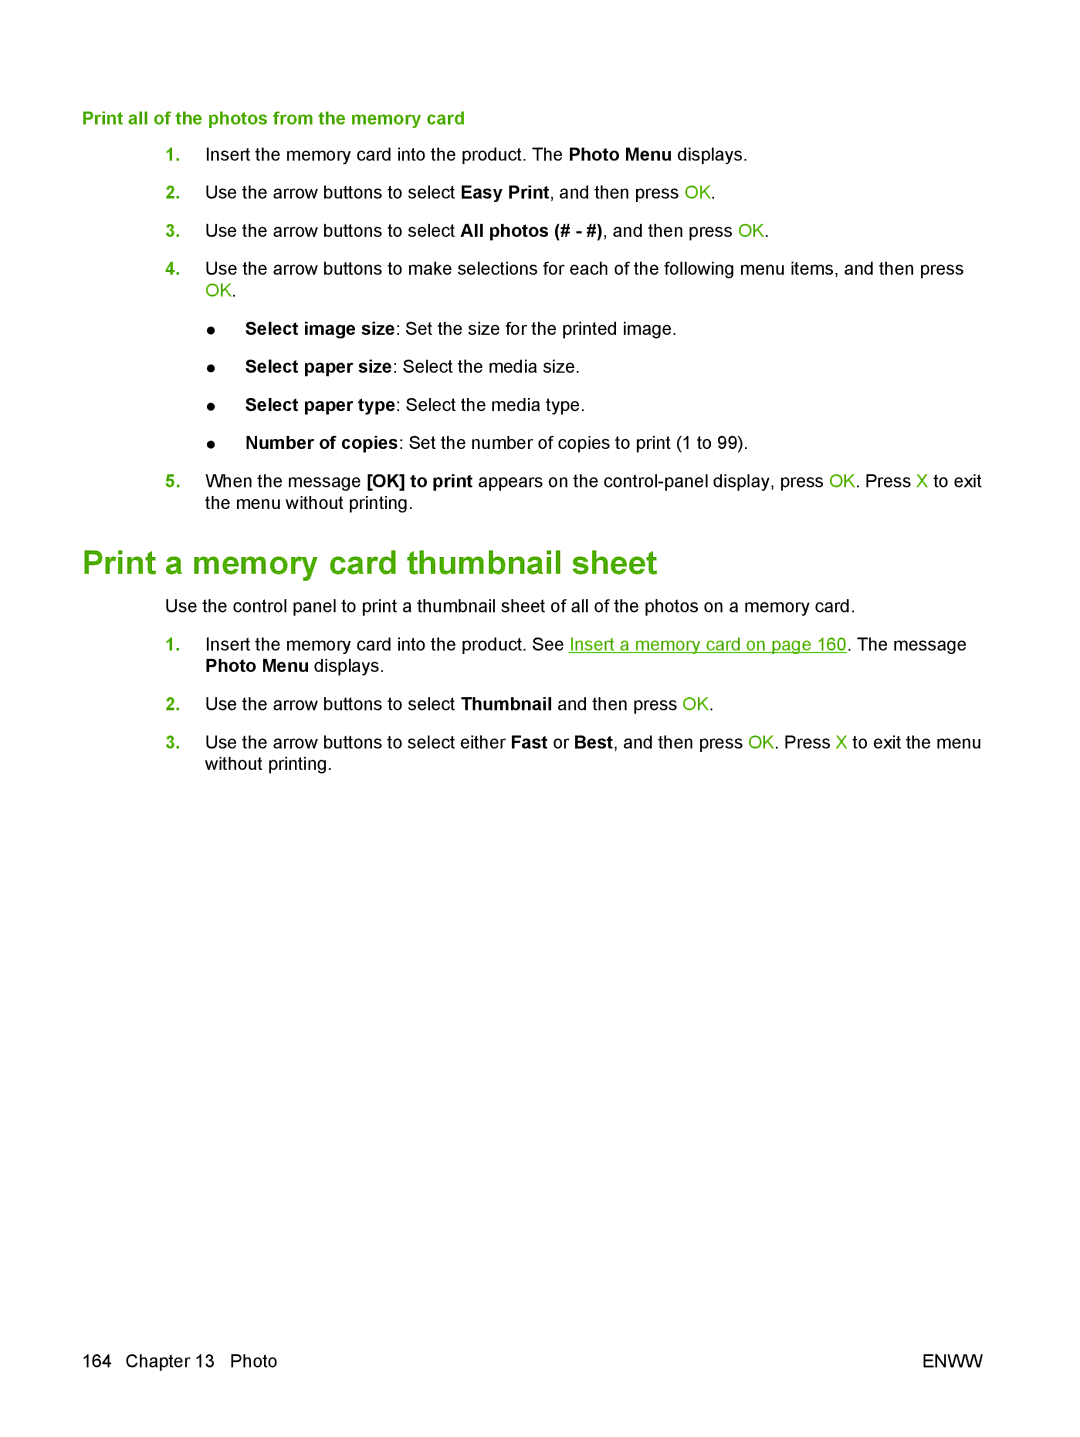 HP CM2320 manual Print a memory card thumbnail sheet, Print all of the photos from the memory card 